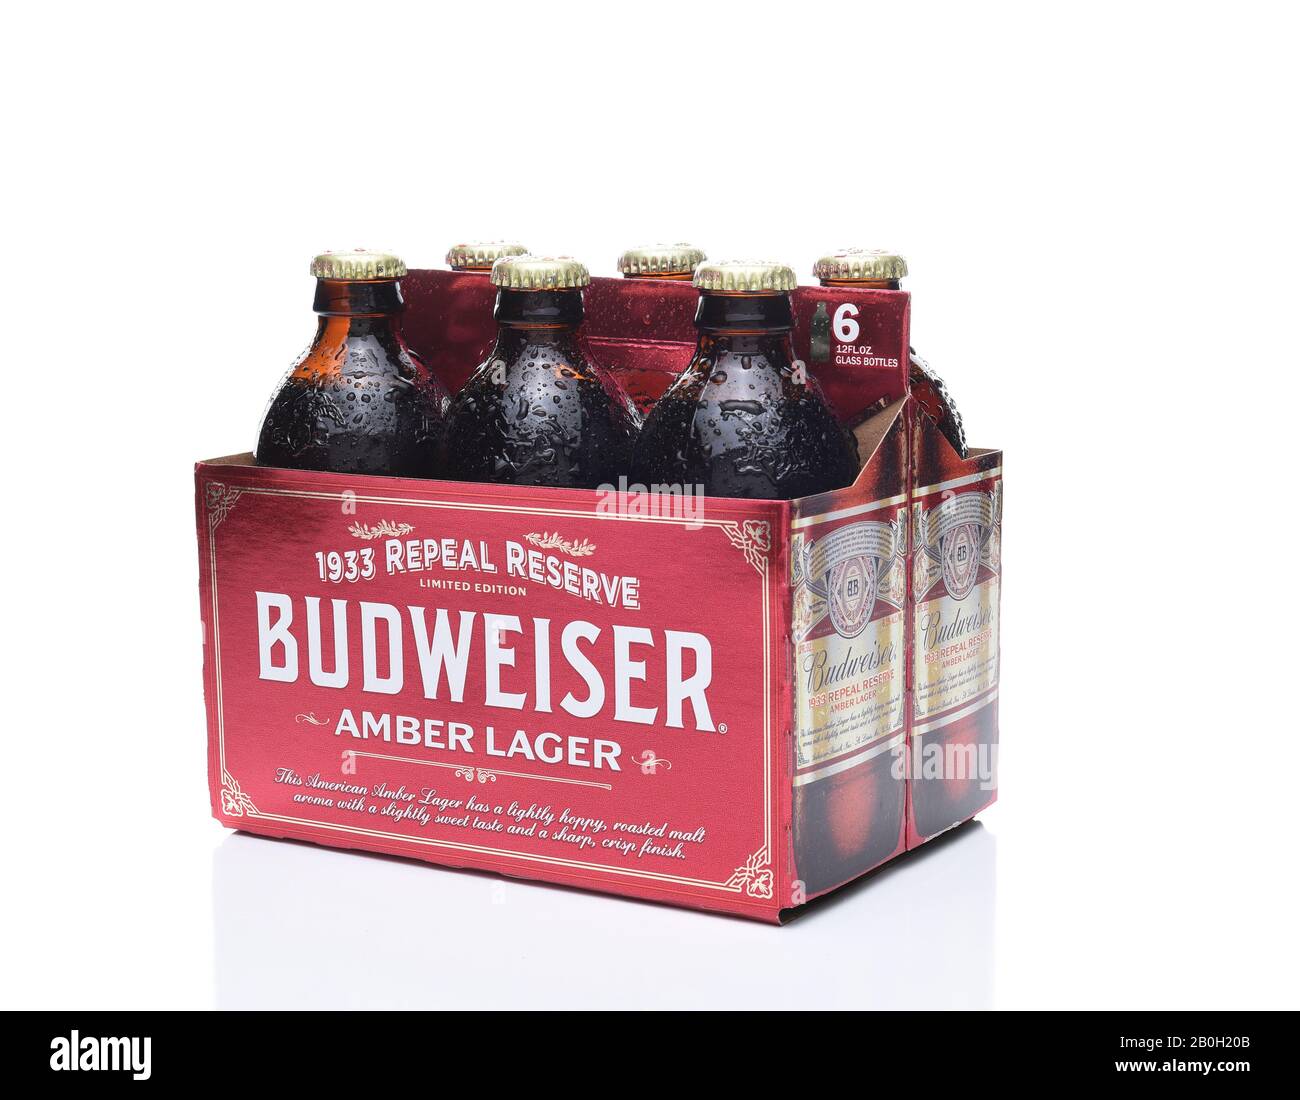 Irvine, CA - 7. NOVEMBER 2017: Budweiser 1933 Repeal Reserve Amber Lager. Budweiser veröffentlicht dieses historisch inspirierte Rezept zur Feier des Re Stockfoto